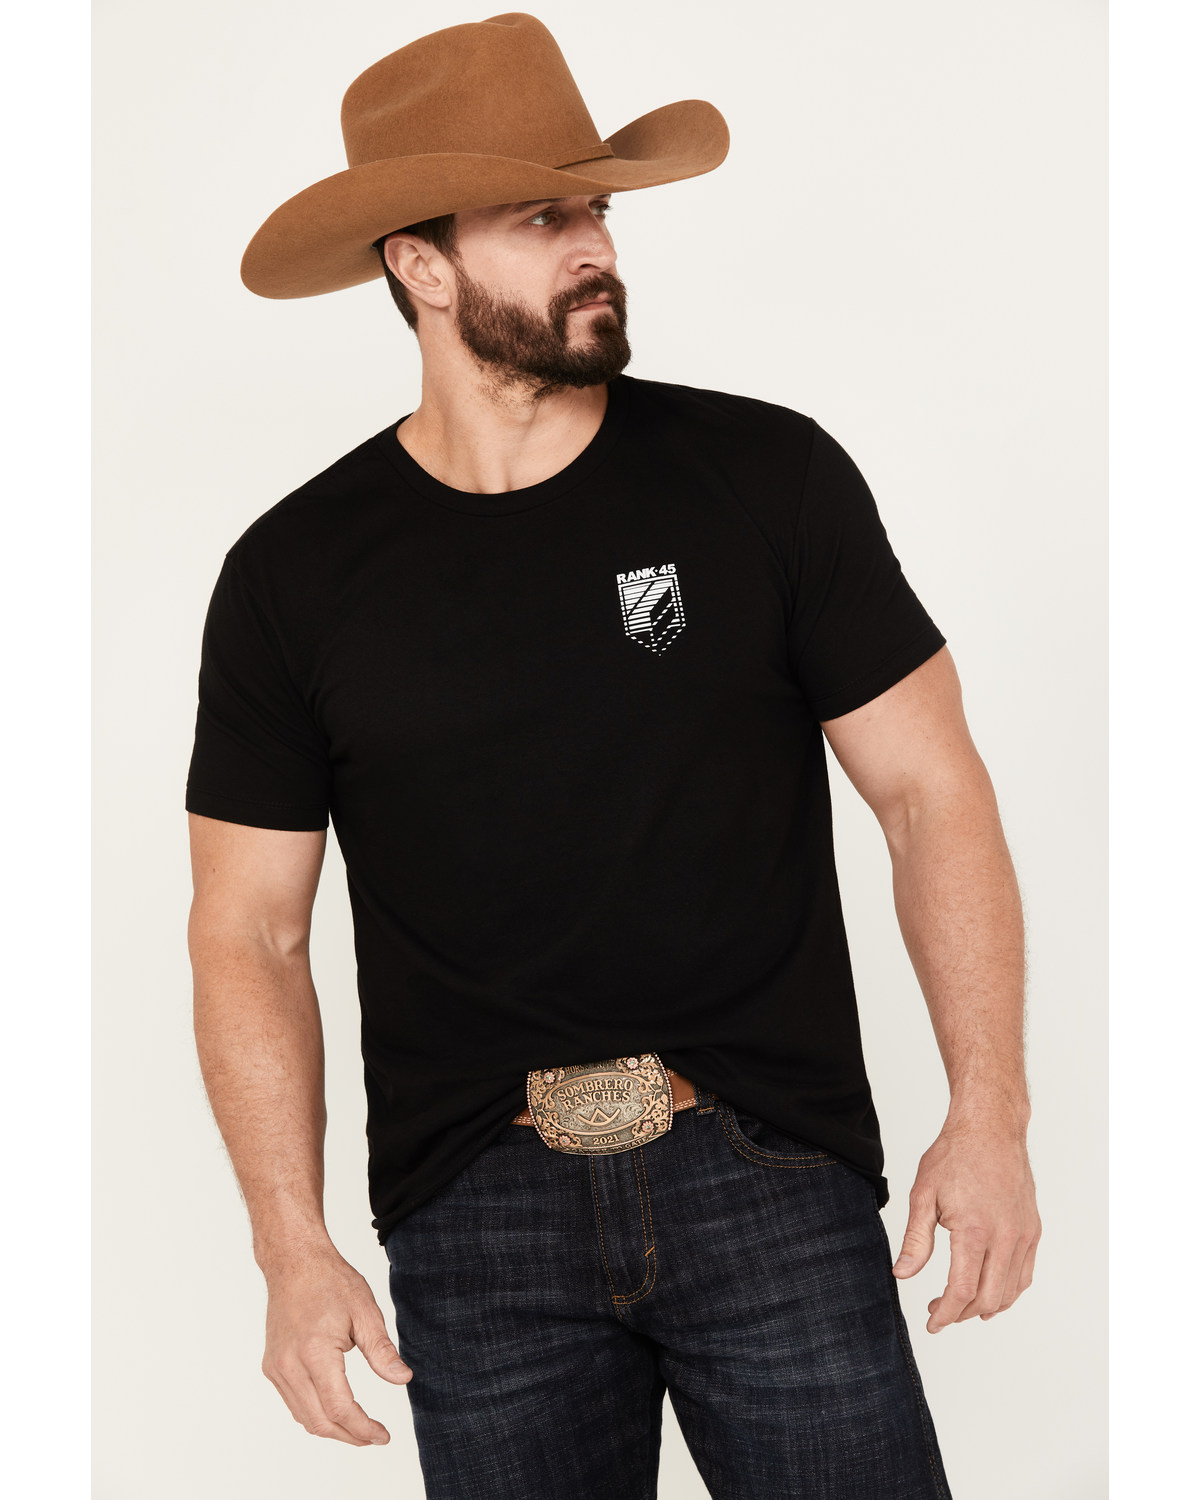 RANK 45® Men's Bronco Coral Short Sleeve Graphic T-Shirt